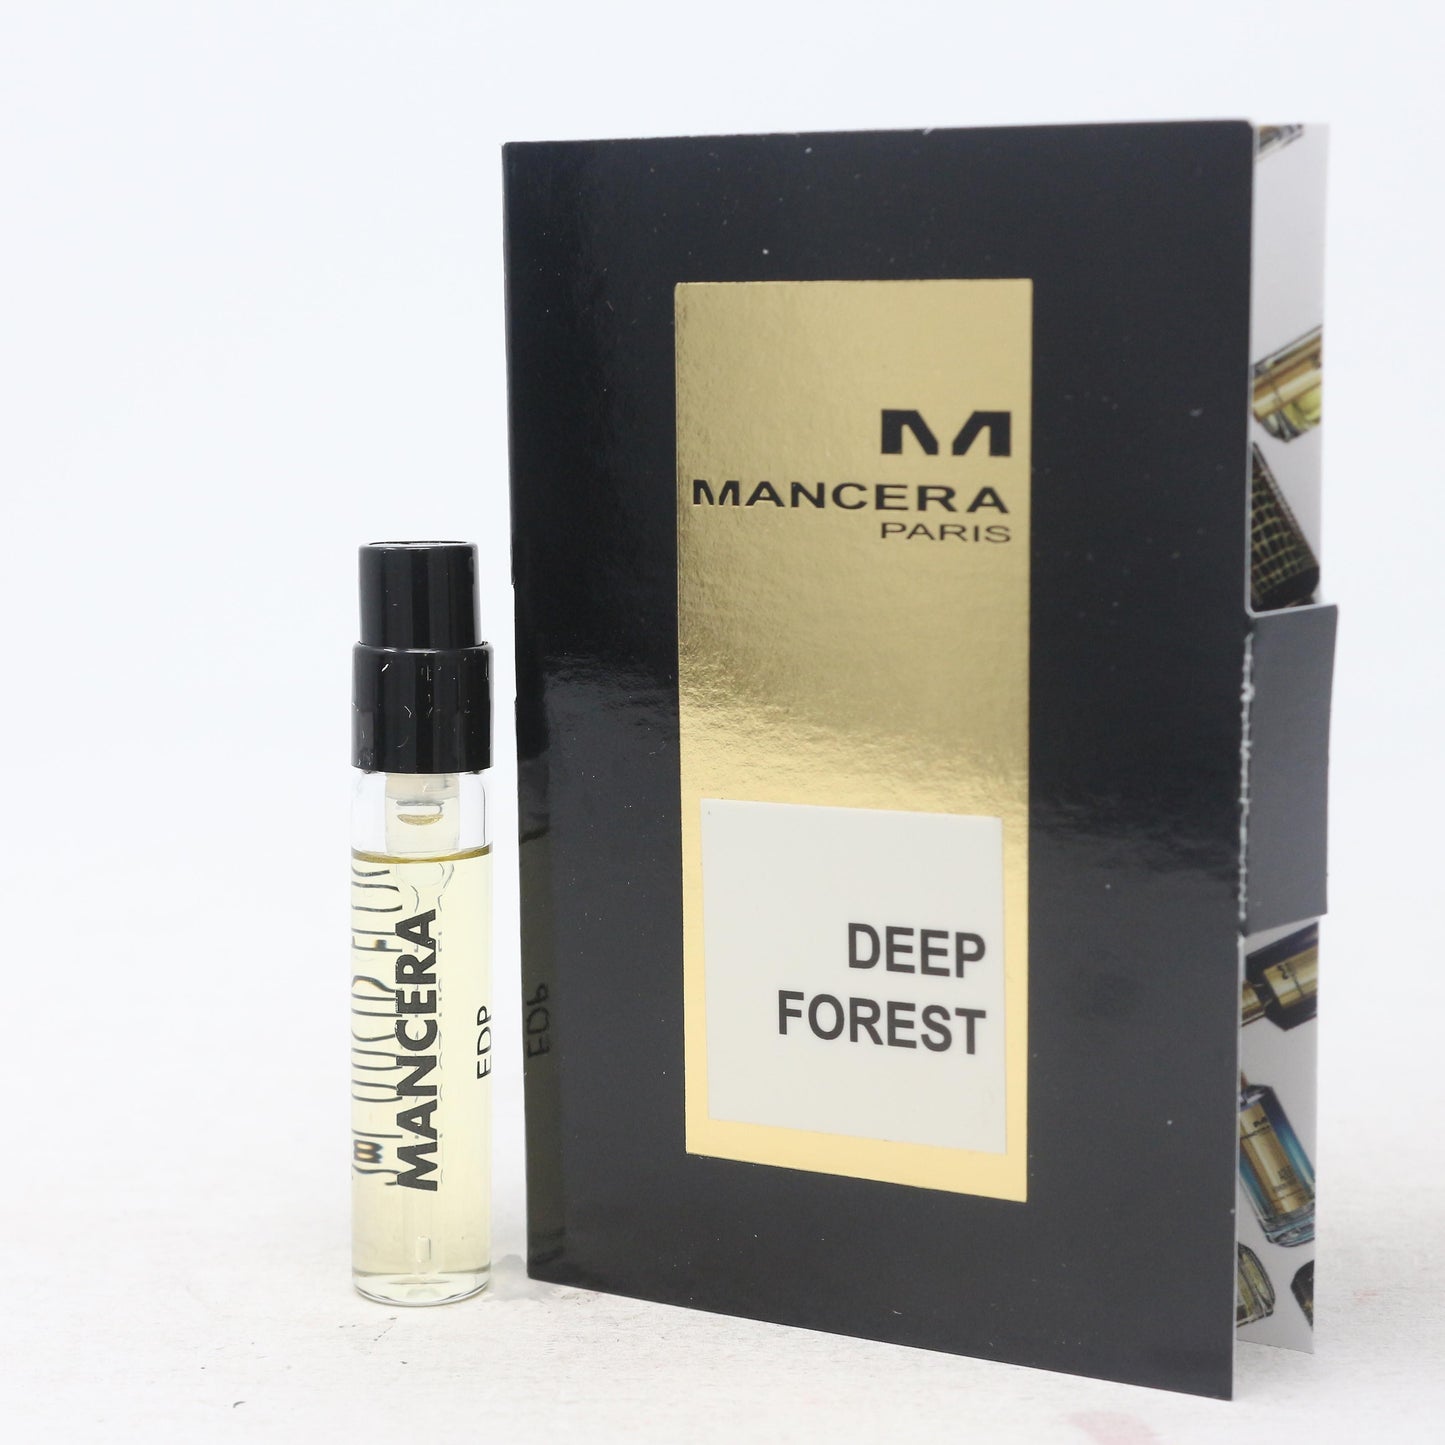 Mancera Deep Forest official perfume sample 2ml 0.07 fl. oz.